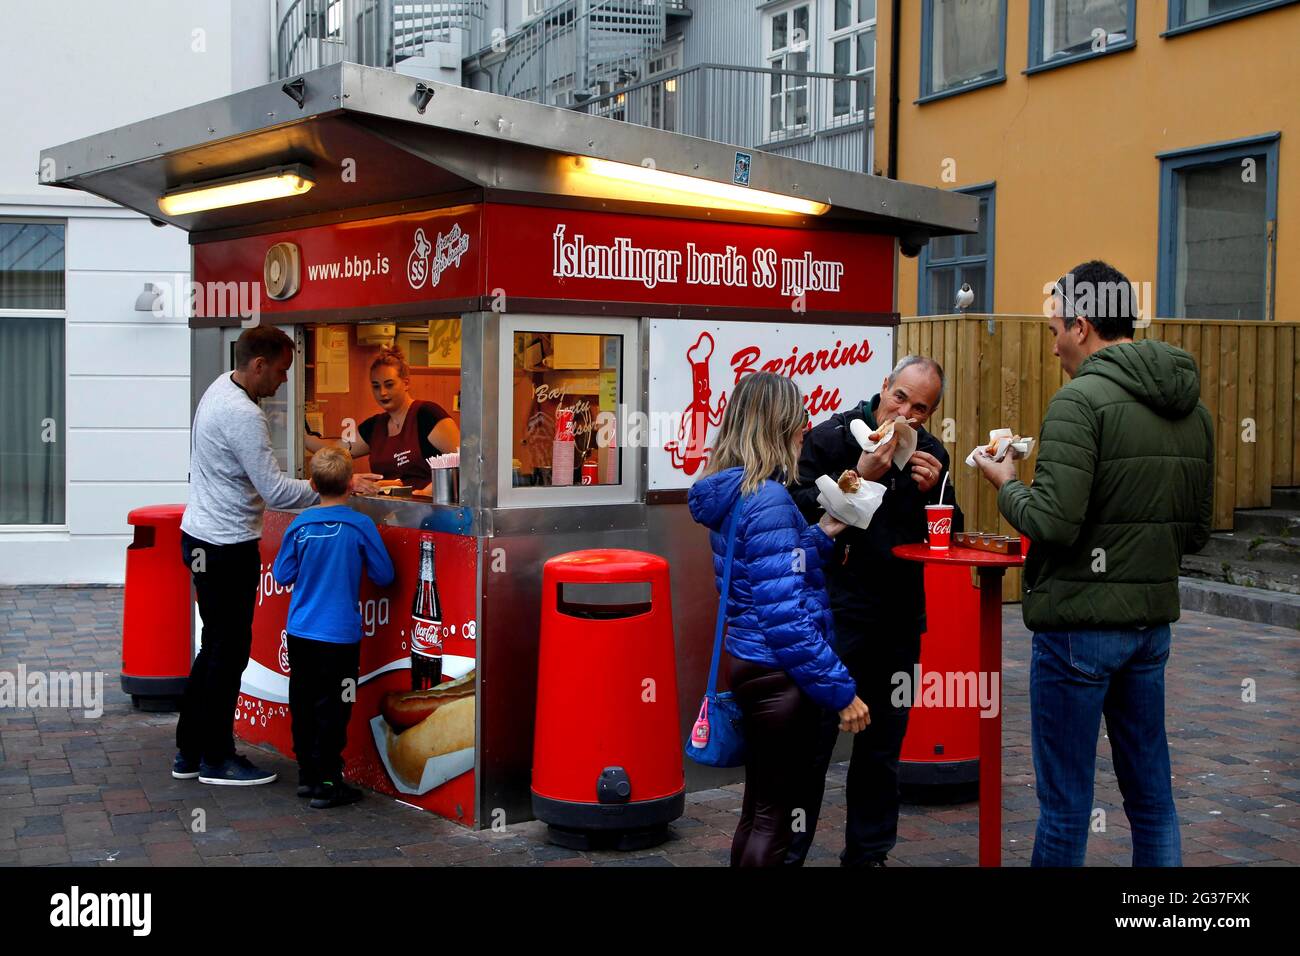 Snackbar, Hot Dog Stand, Baejarinseztu, Kunden, Reykjavik, Island Stockfoto